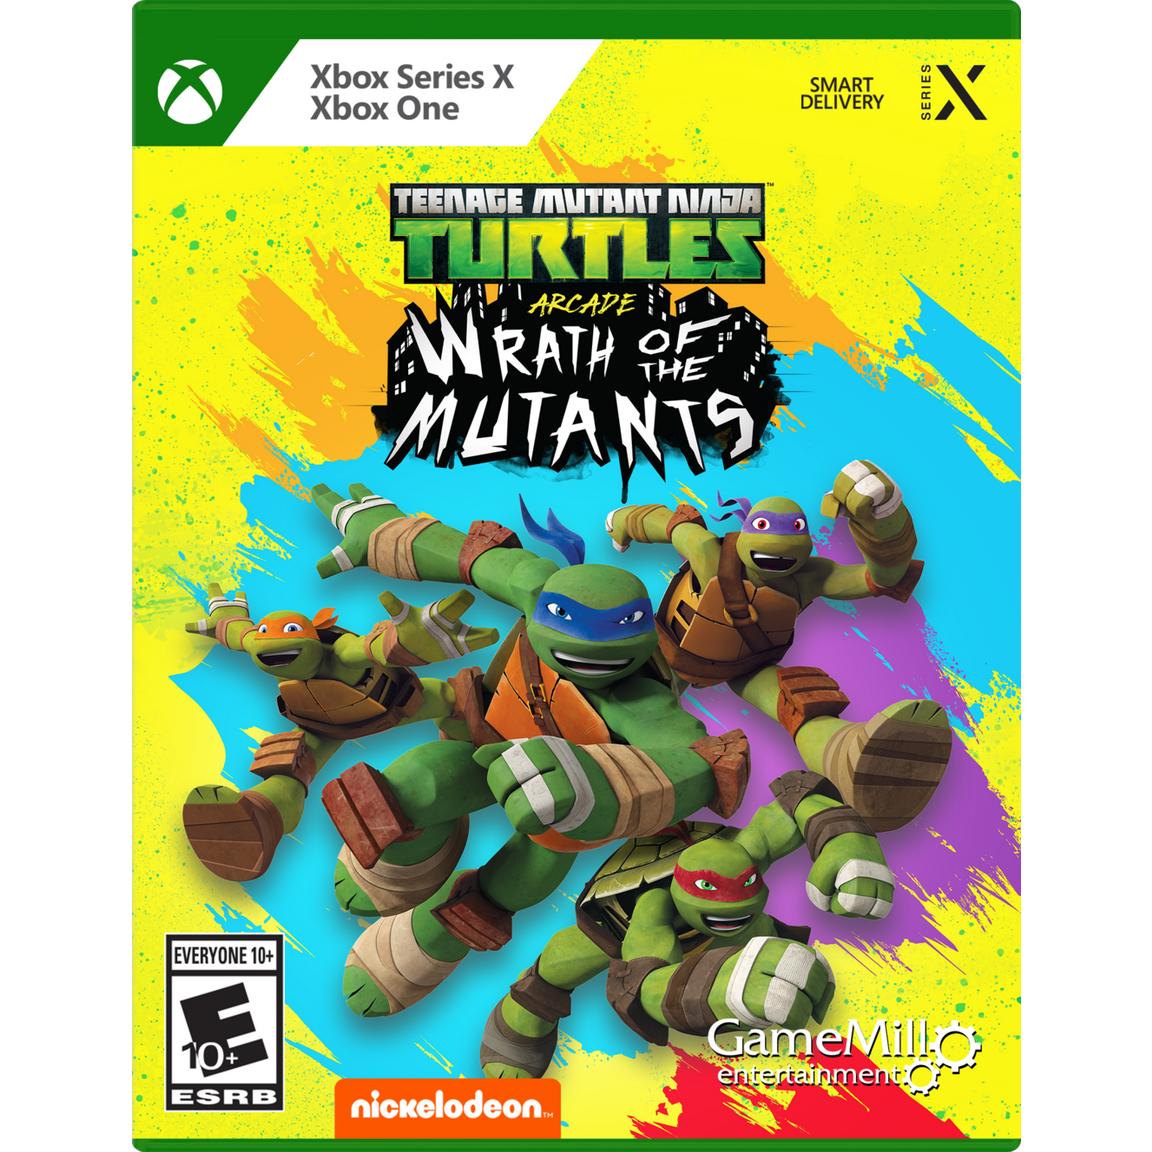 TMNT Arcade: Wrath of the Mutants - Xbox Series X, Xbox One